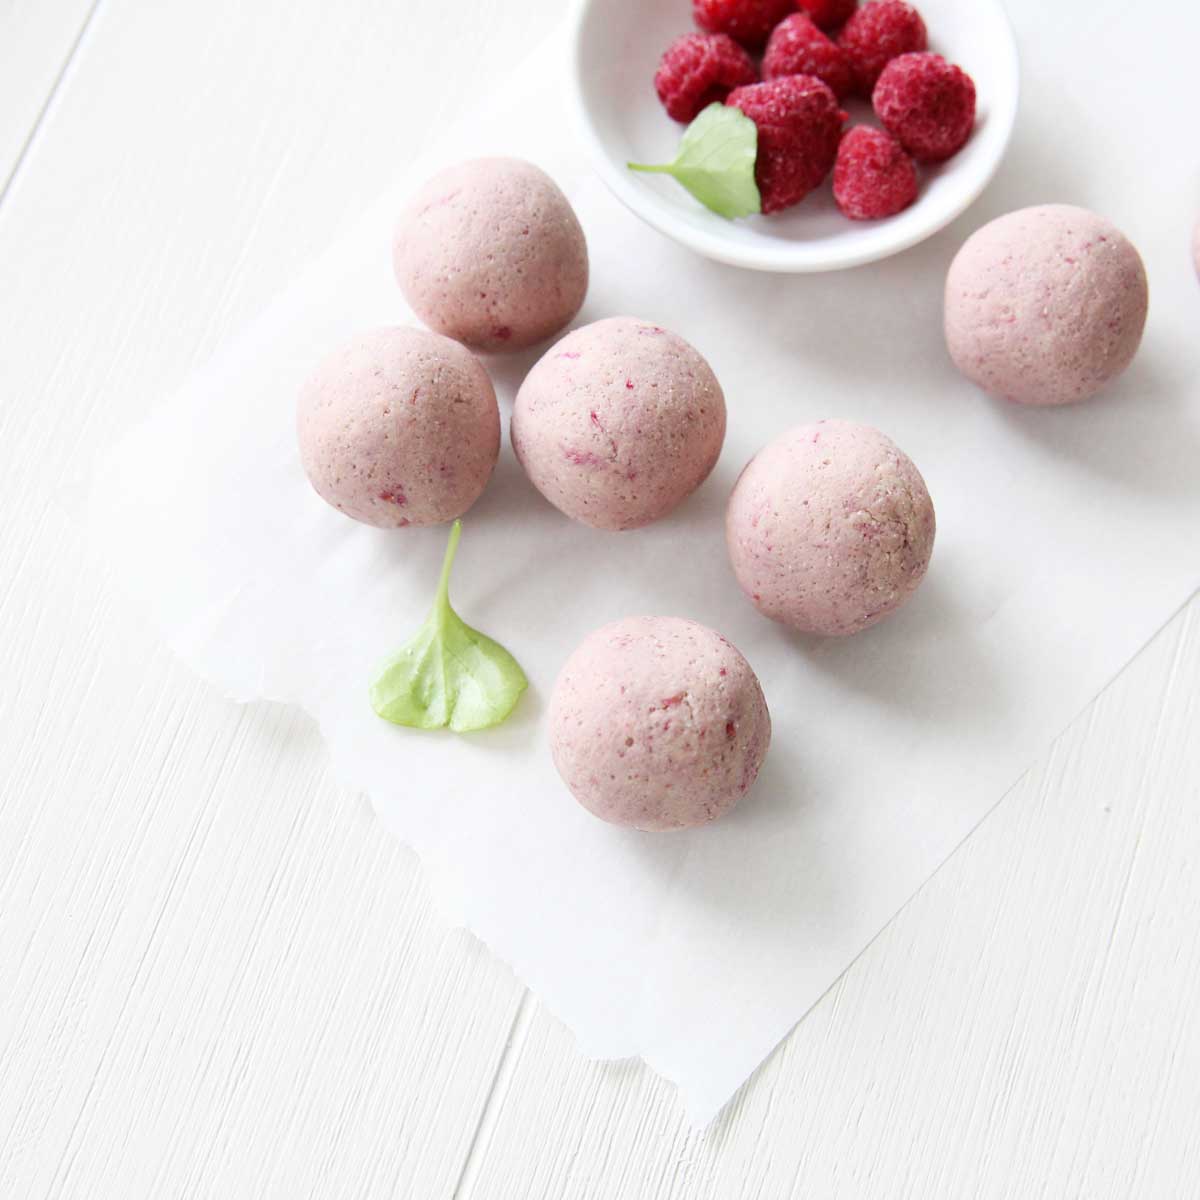 Raspberry Cheesecake Protein Balls (Healthy Energy Bites) - Matcha Latte Protein Balls